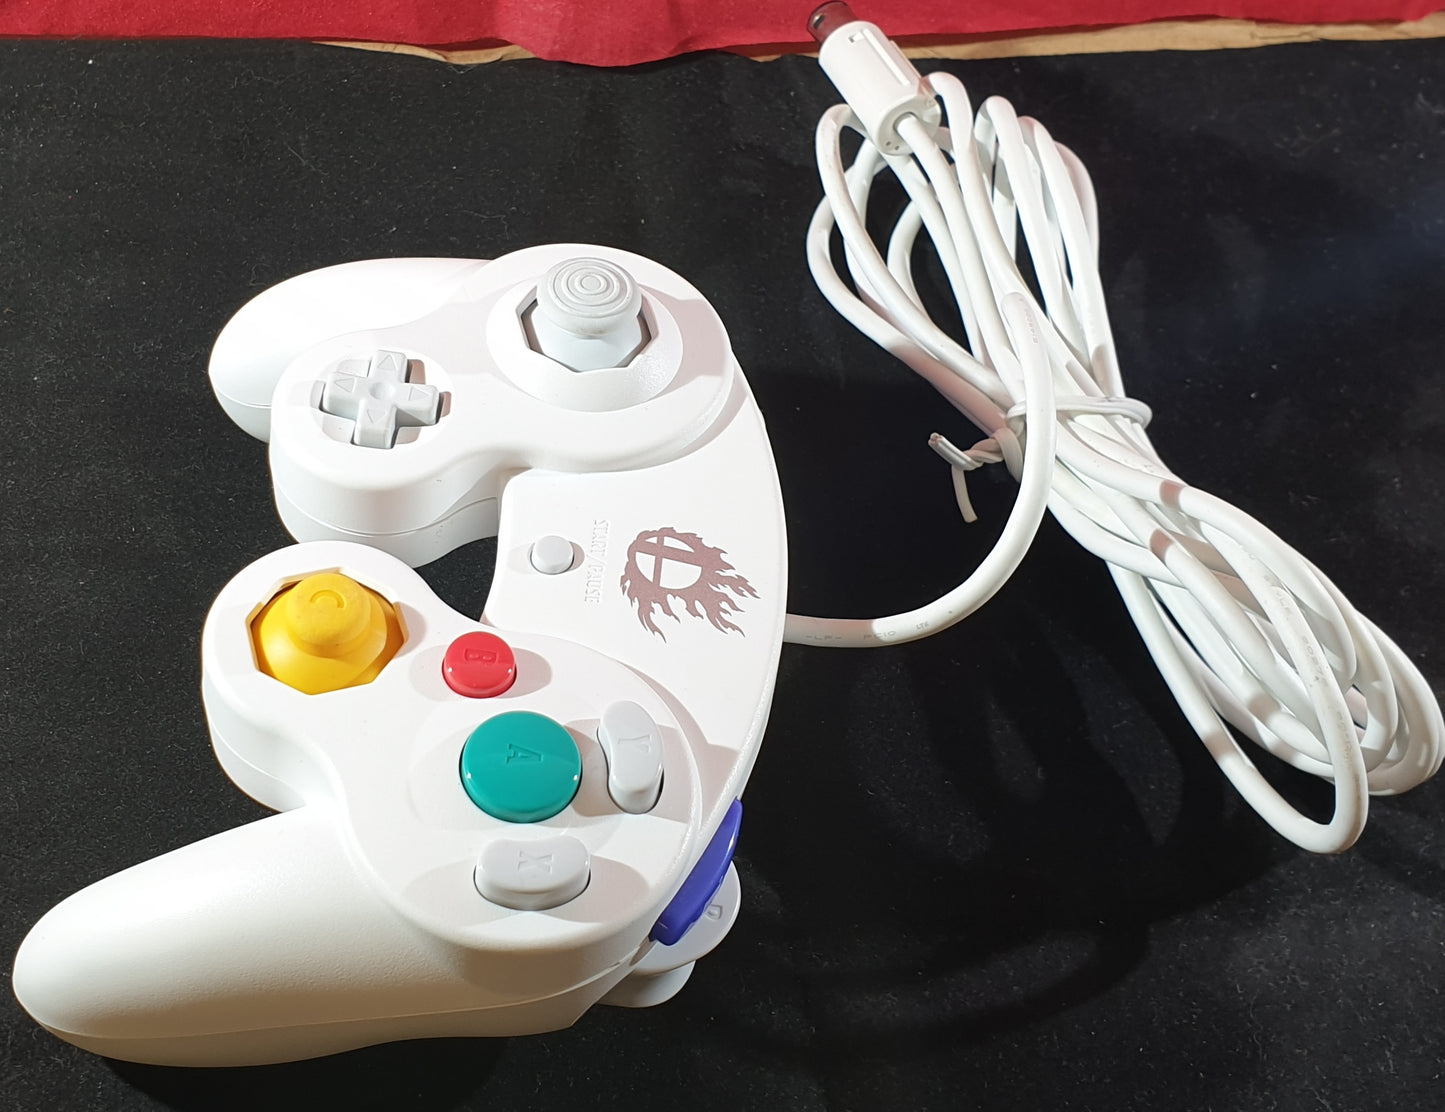 Limited Edition Super Smash Bros Nintendo GameCube Controller Accessory